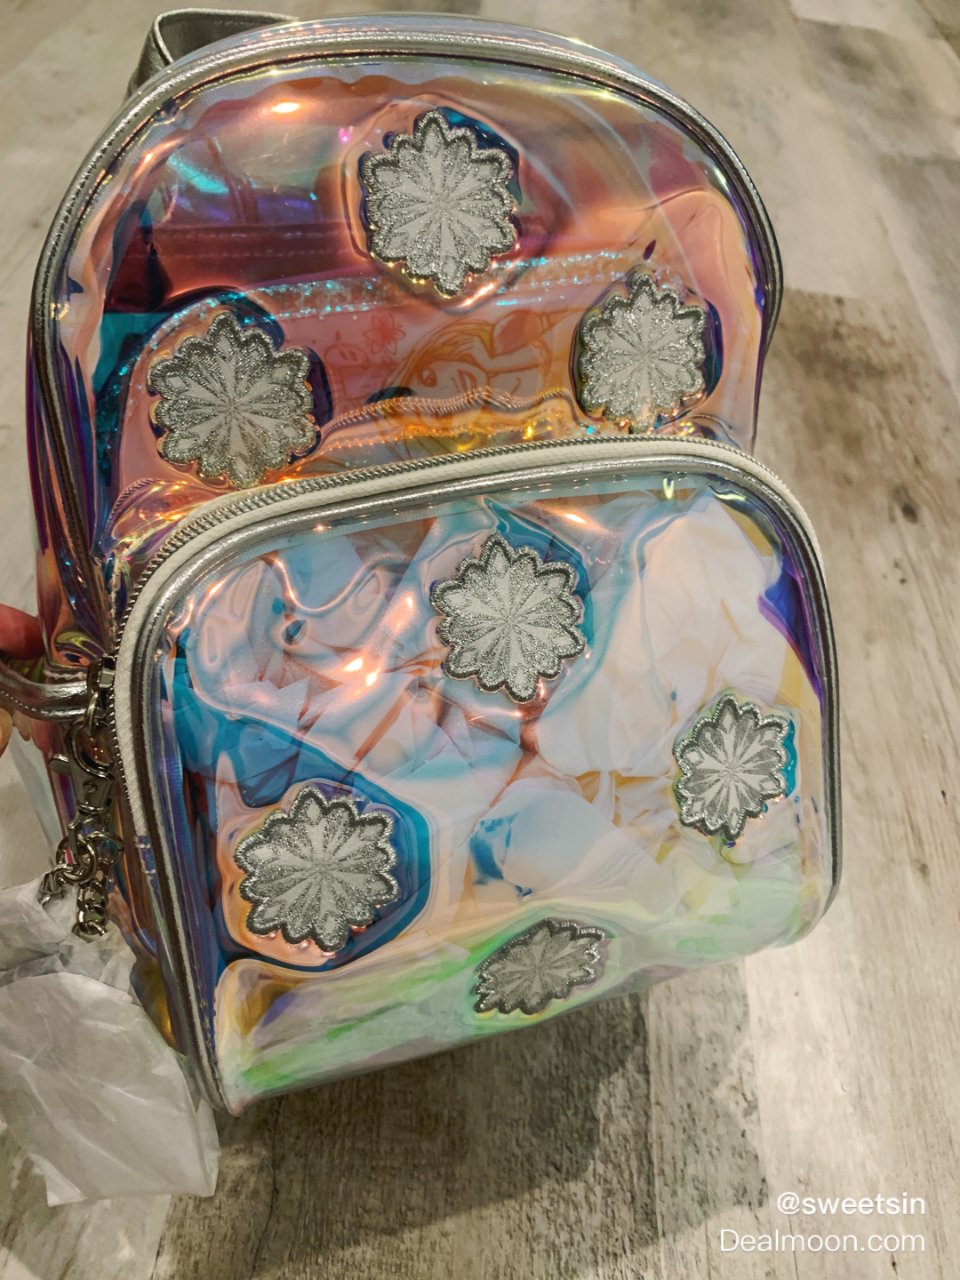 Frozen 2 Mini Backpack | shopDisney